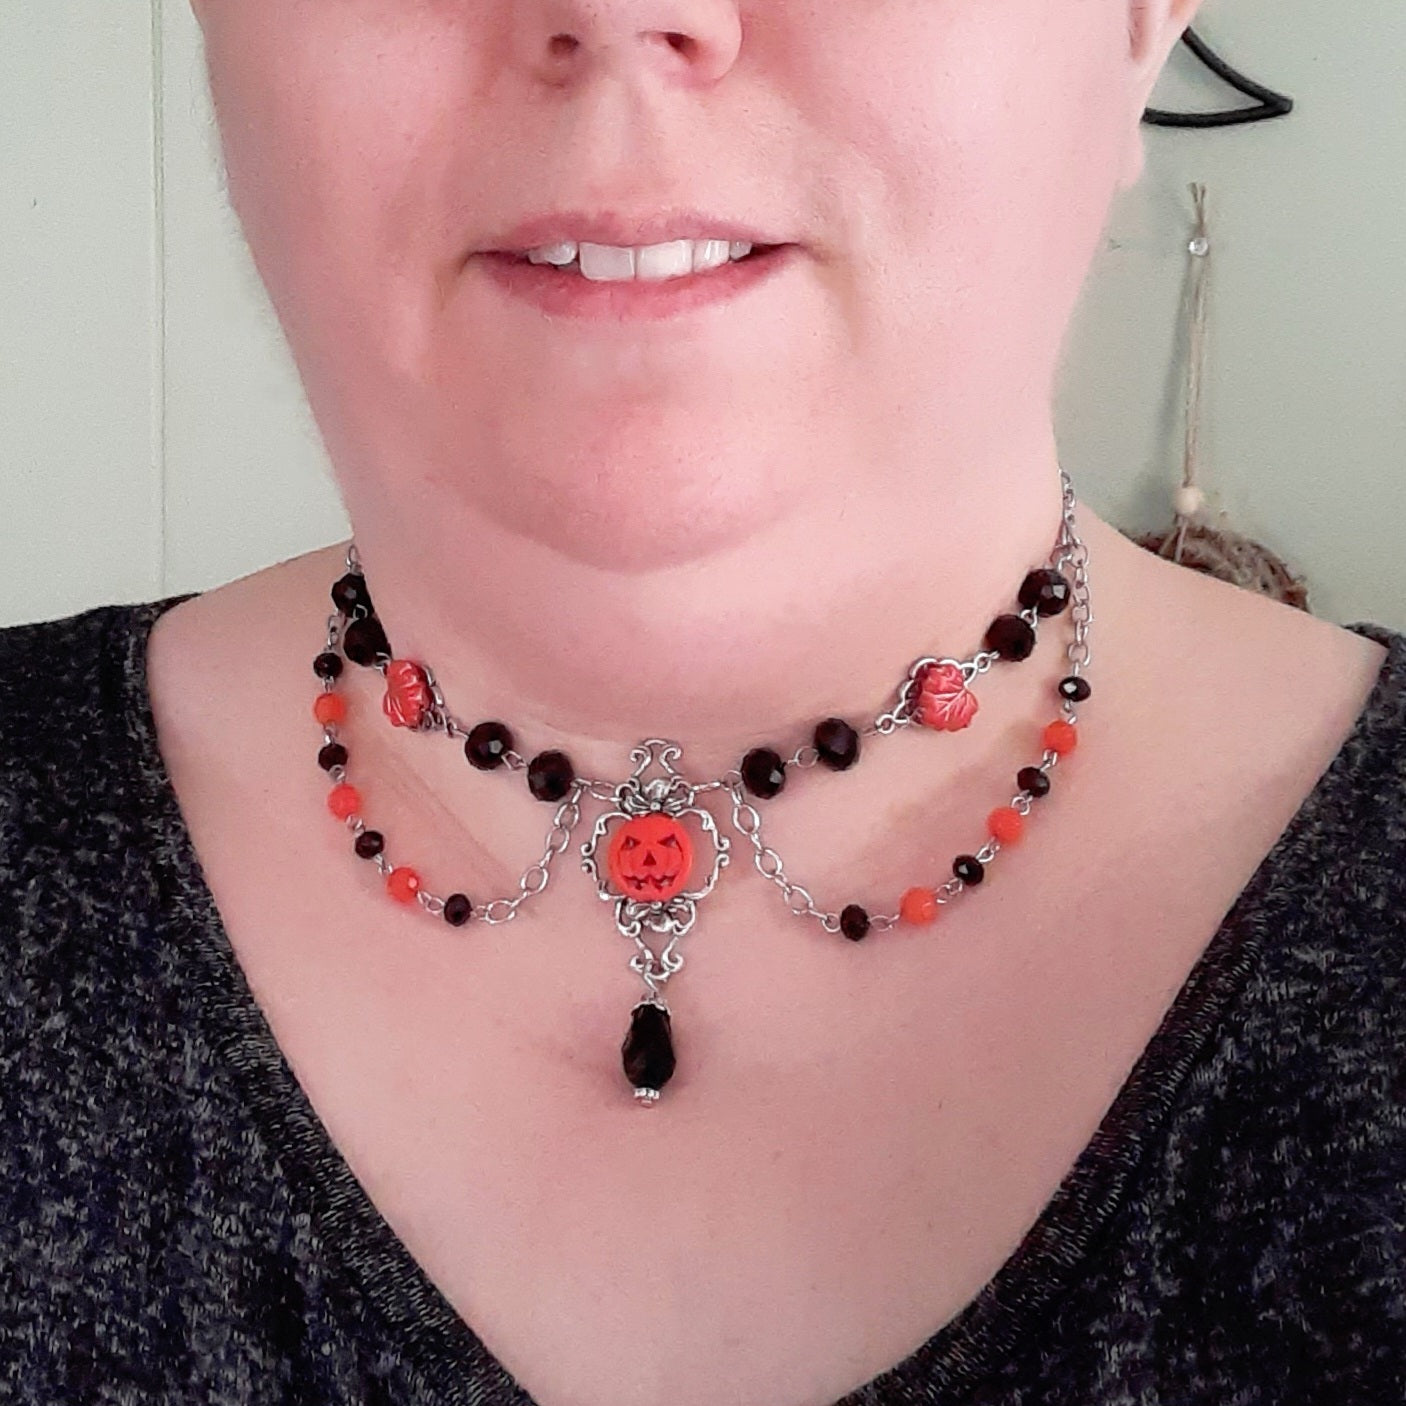 Jack O Lantern choker necklace Plus size adjustable Pumpkin necklace Orange and black beaded Gothic choker necklace